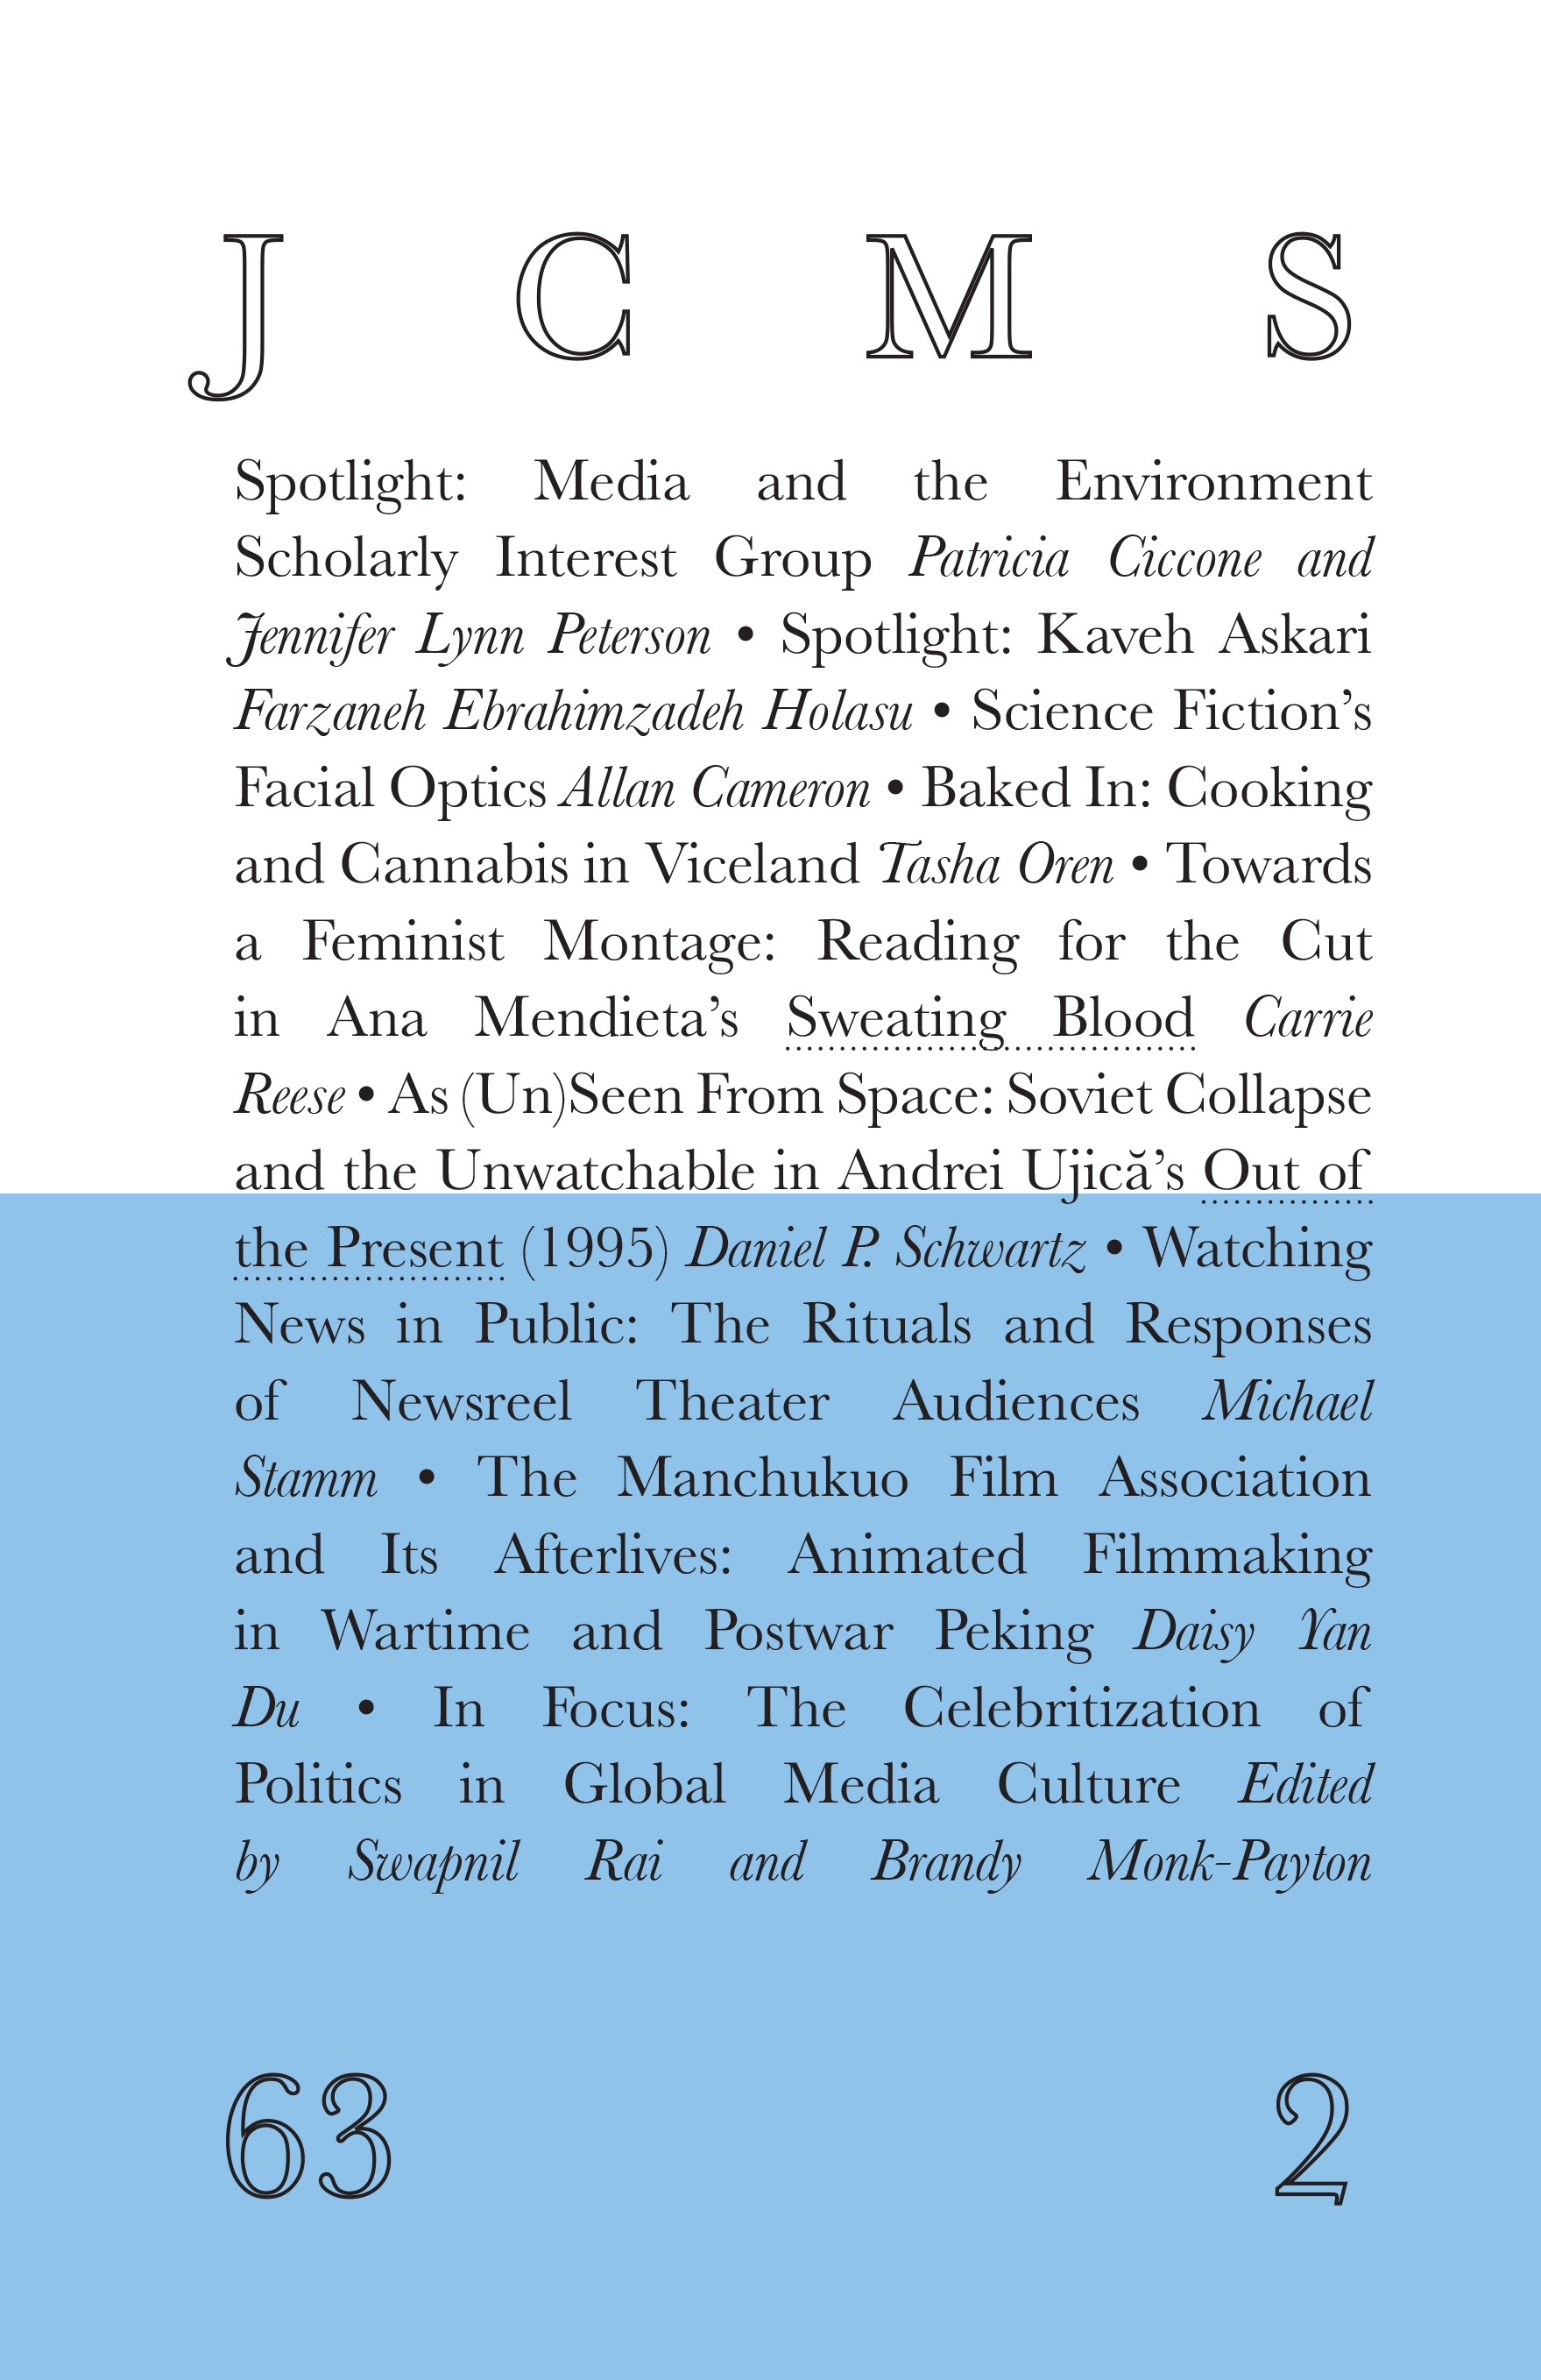 Journal of Cinema and Media Studies, vol. 63, no. 2